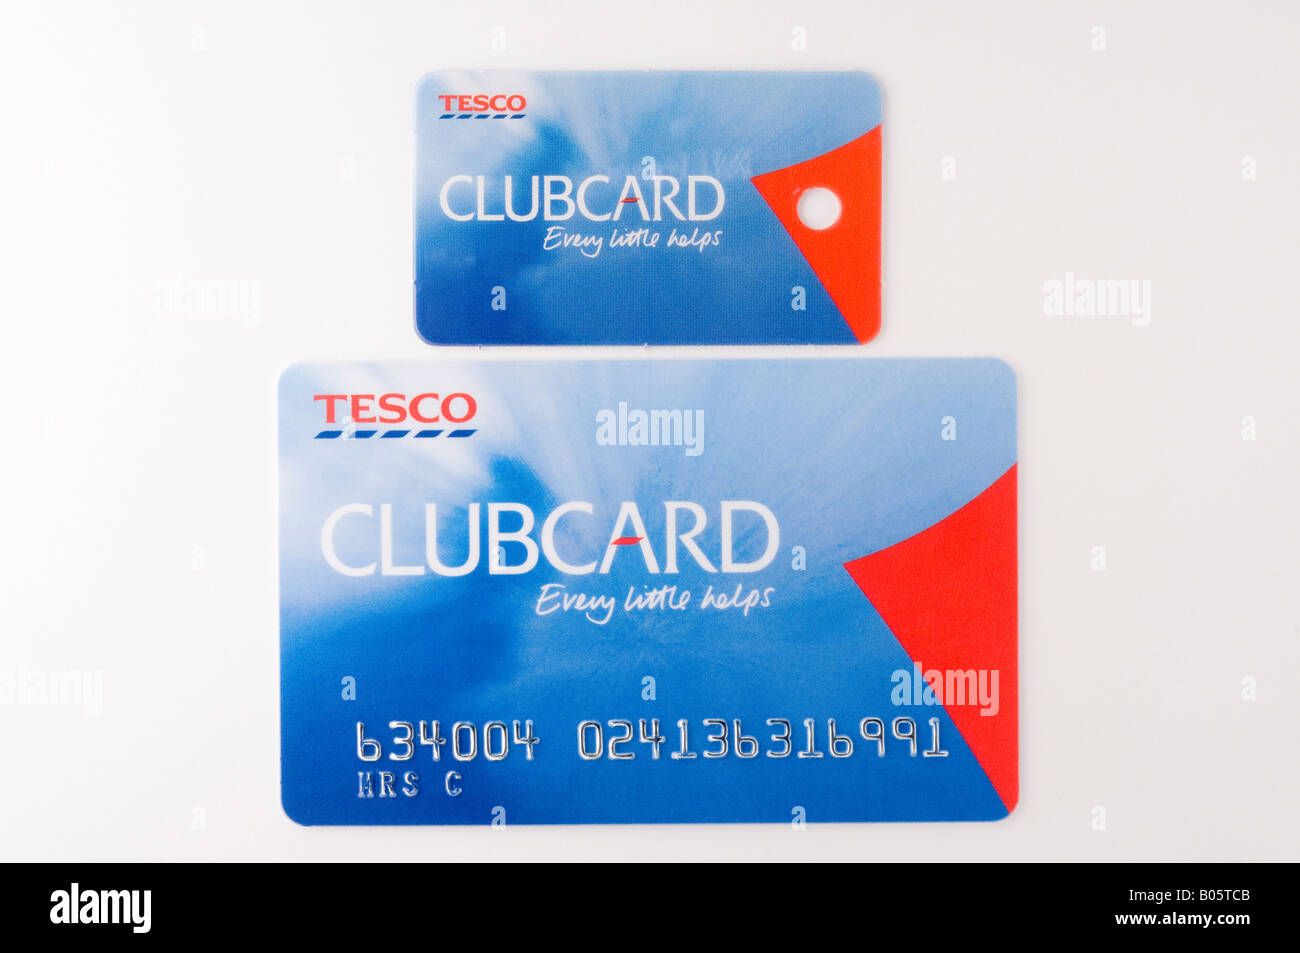 Tesco Clubcards on a white background Stock Photo